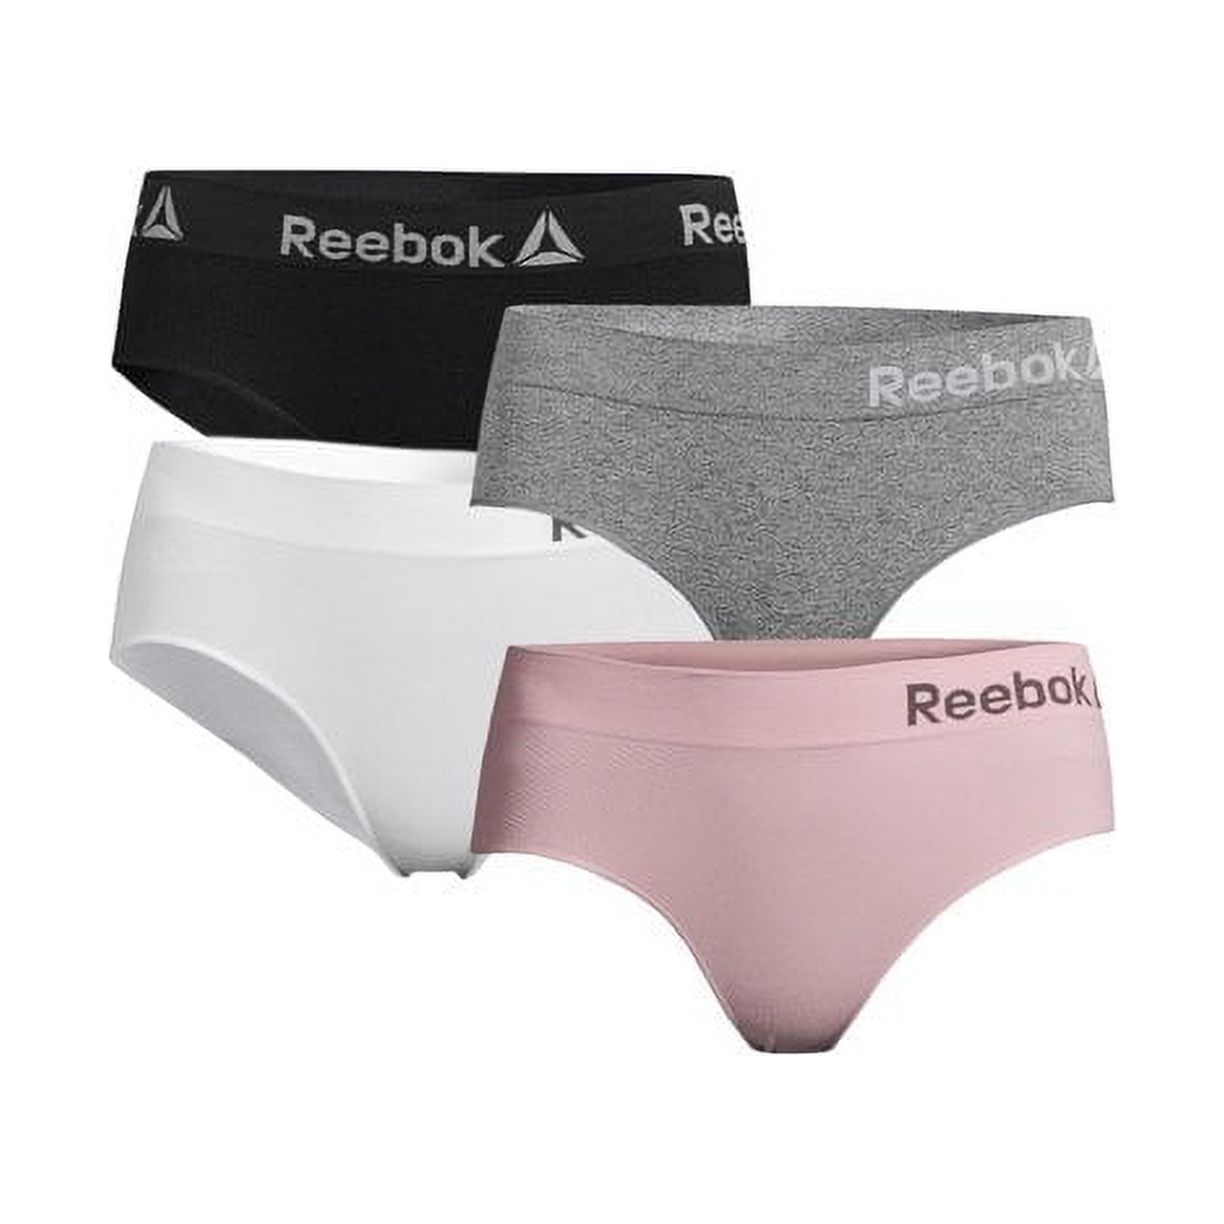 Reebok Women's Underwear Seamless Hipster Panties, 4-Pack - image 1 of 4